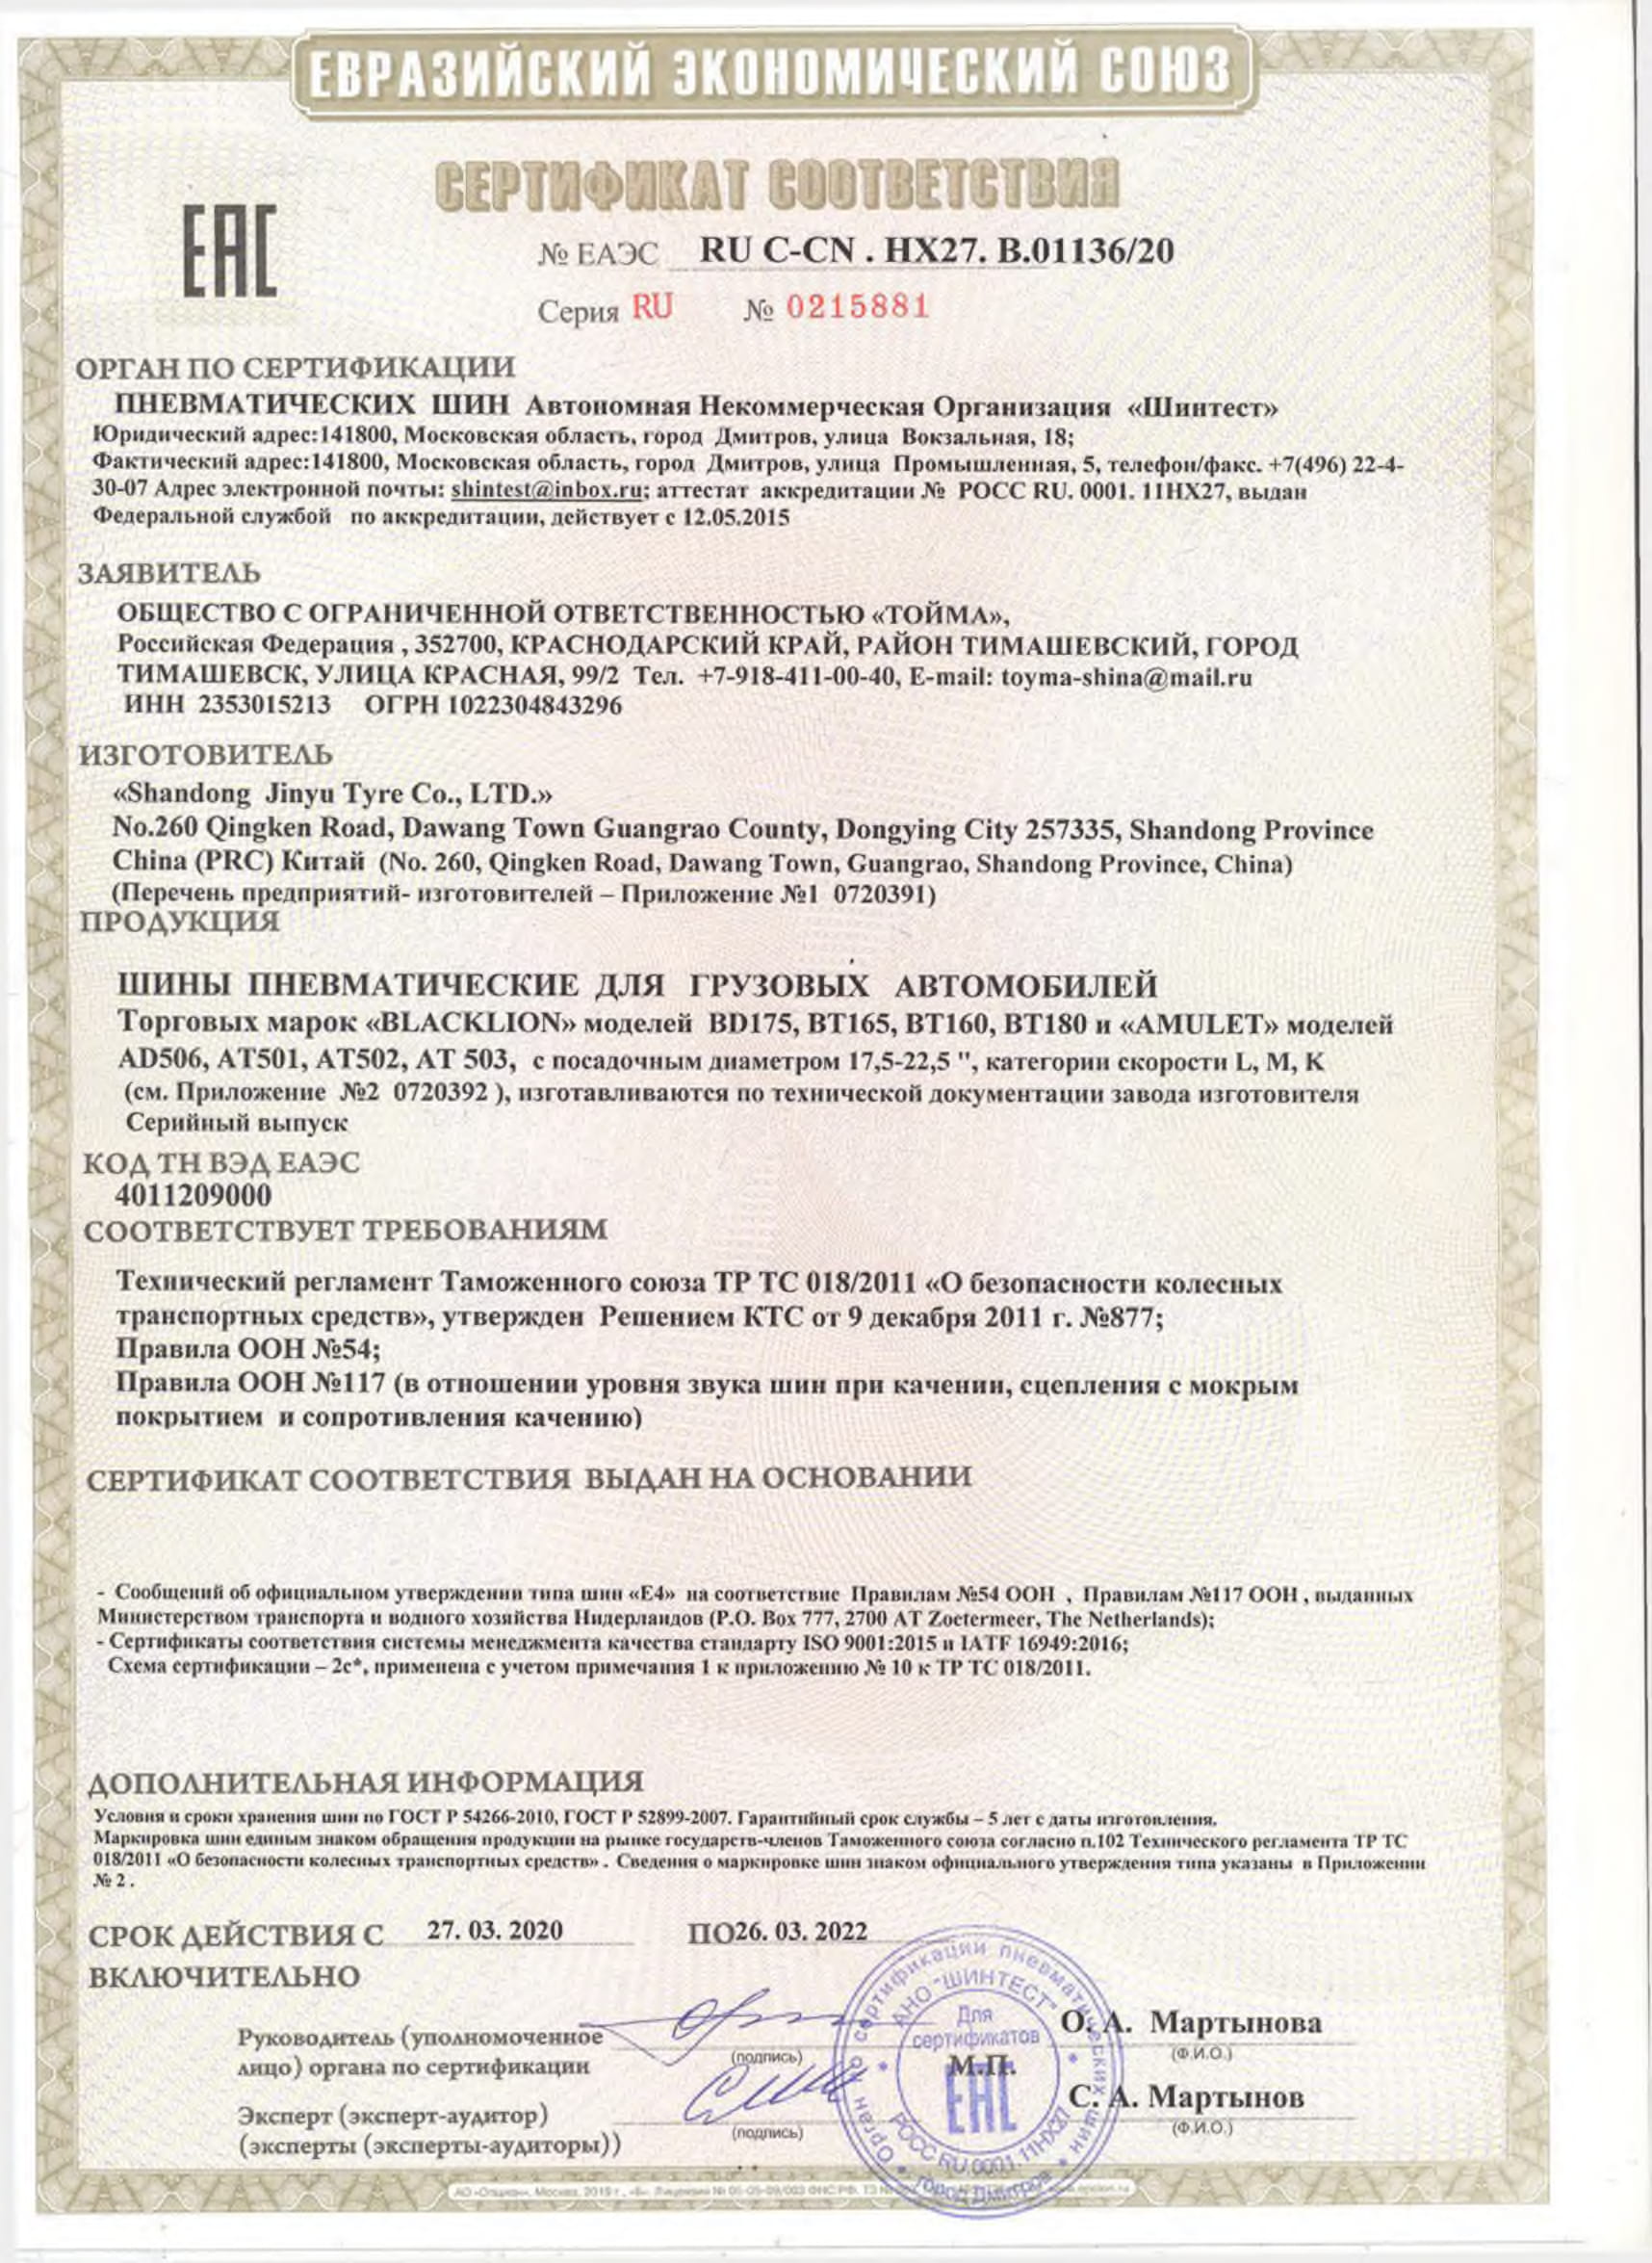 Сертификат соответствия № ЕАЭС RU C-CN.HX27.B.01136/20